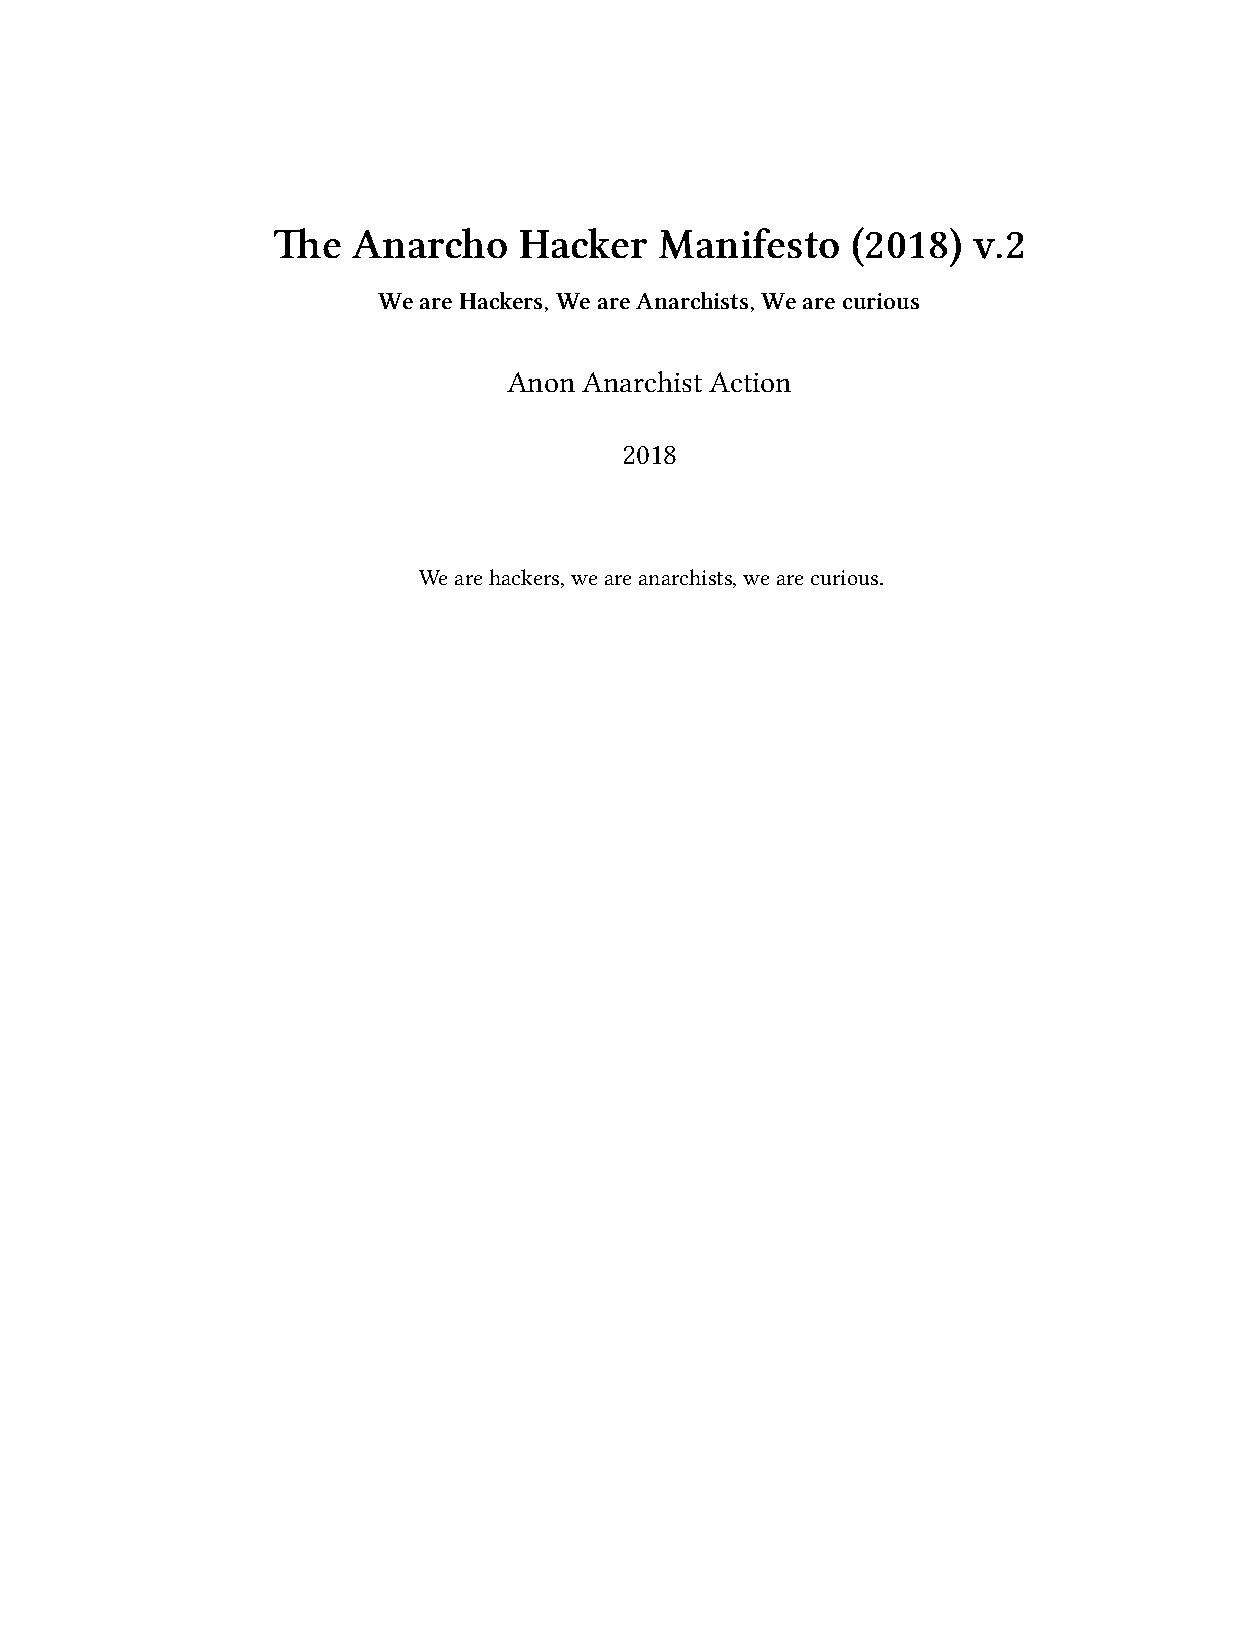 Anarcho Hacker Manifesto - Anon Anarchist Action